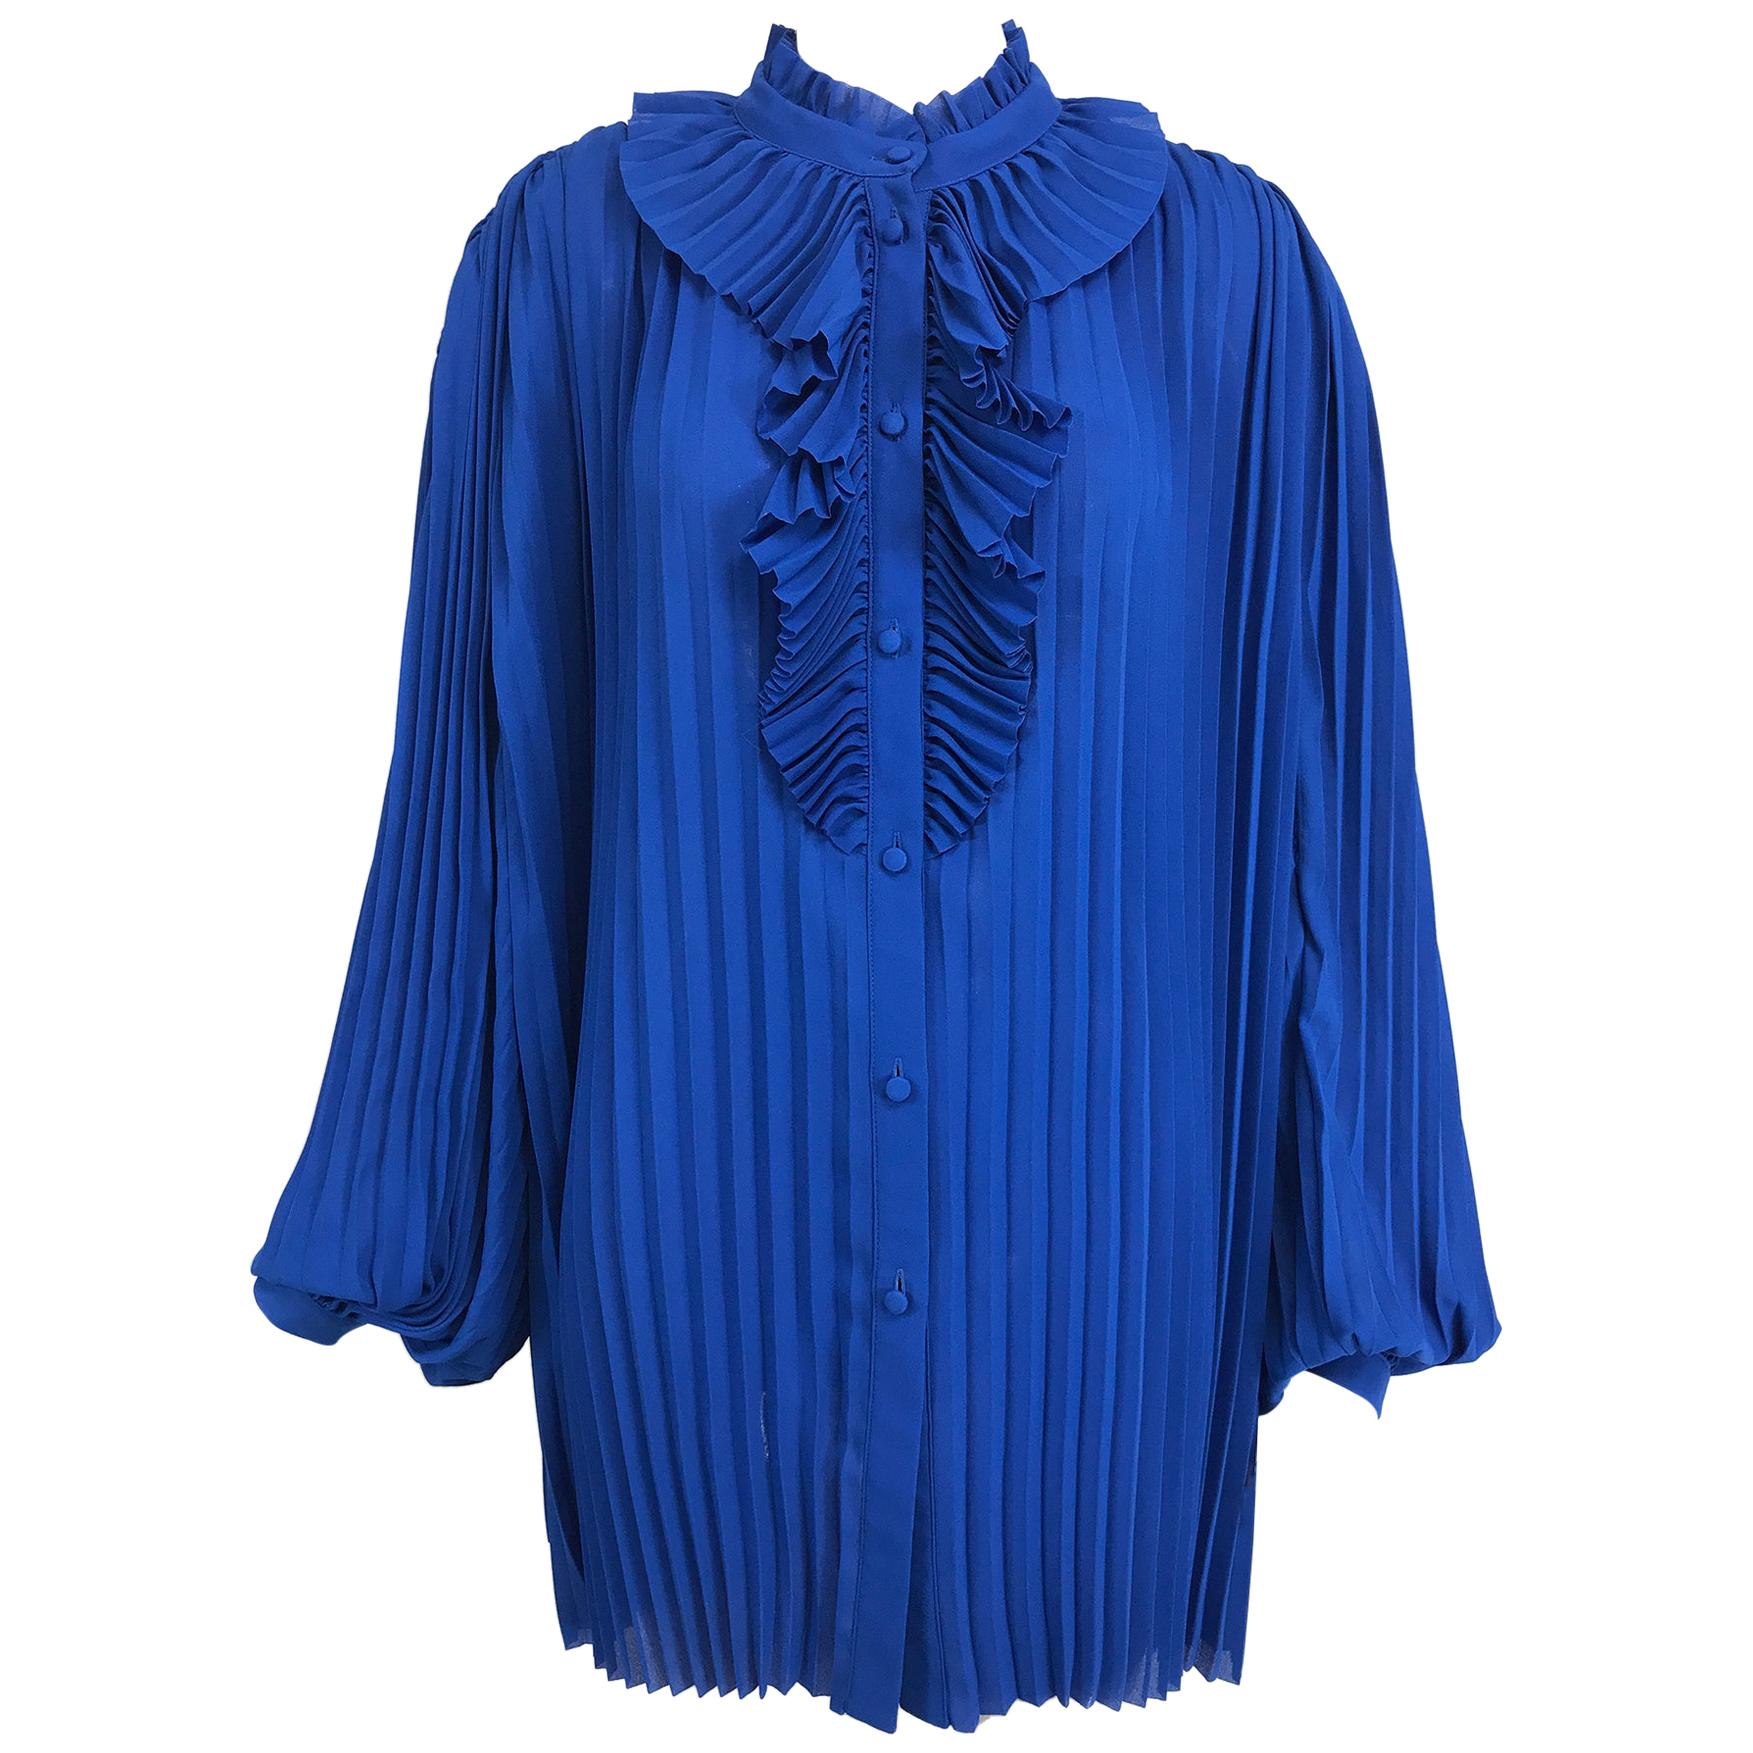 Balenciaga Resort 2017 Multi Style Royal Blue Pleated Tunic Blouse 42